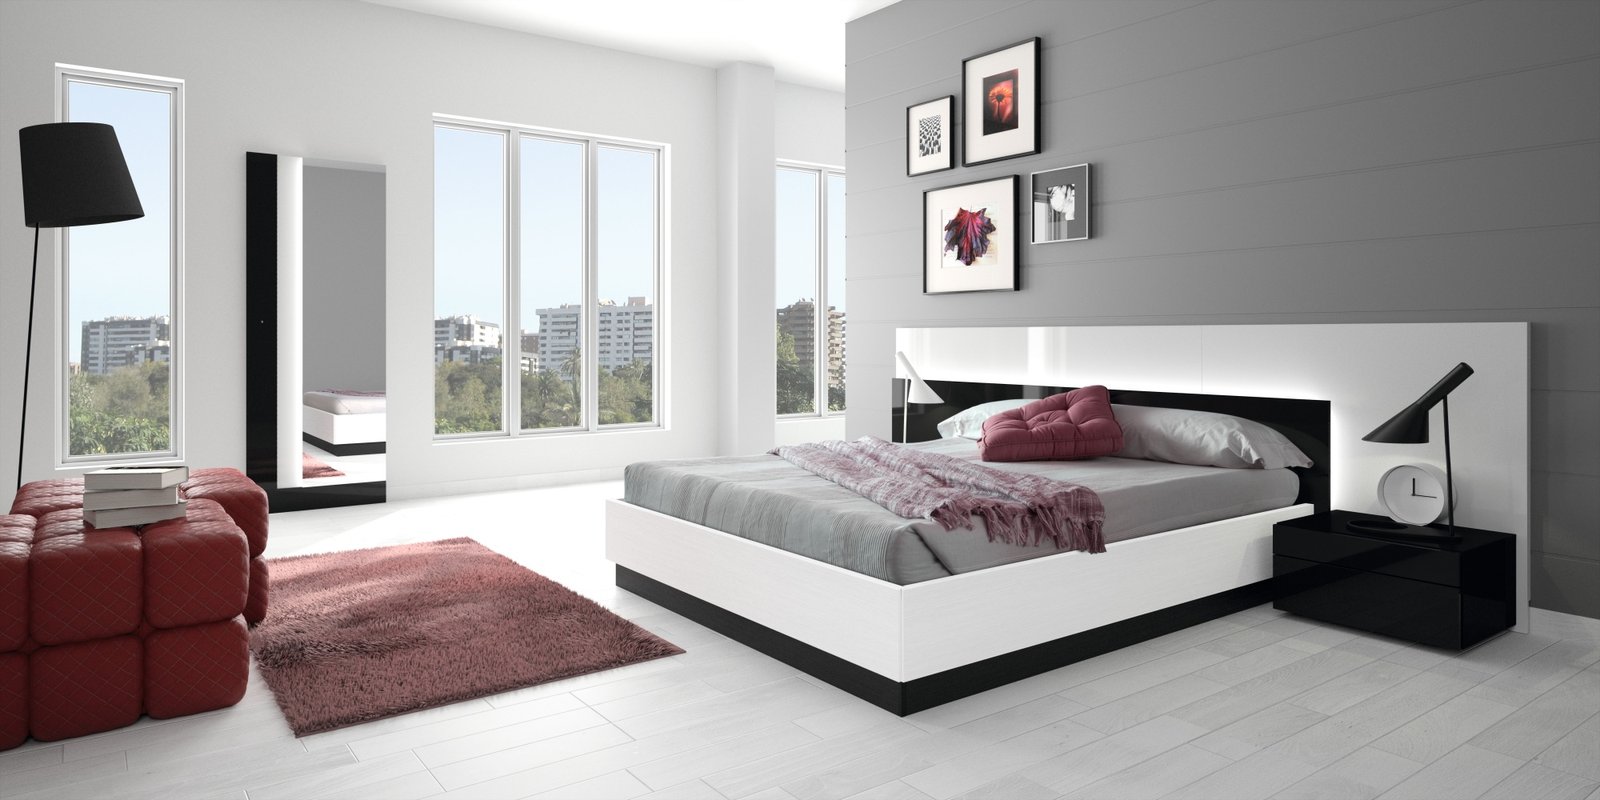 starplan beds & bedroom furniture